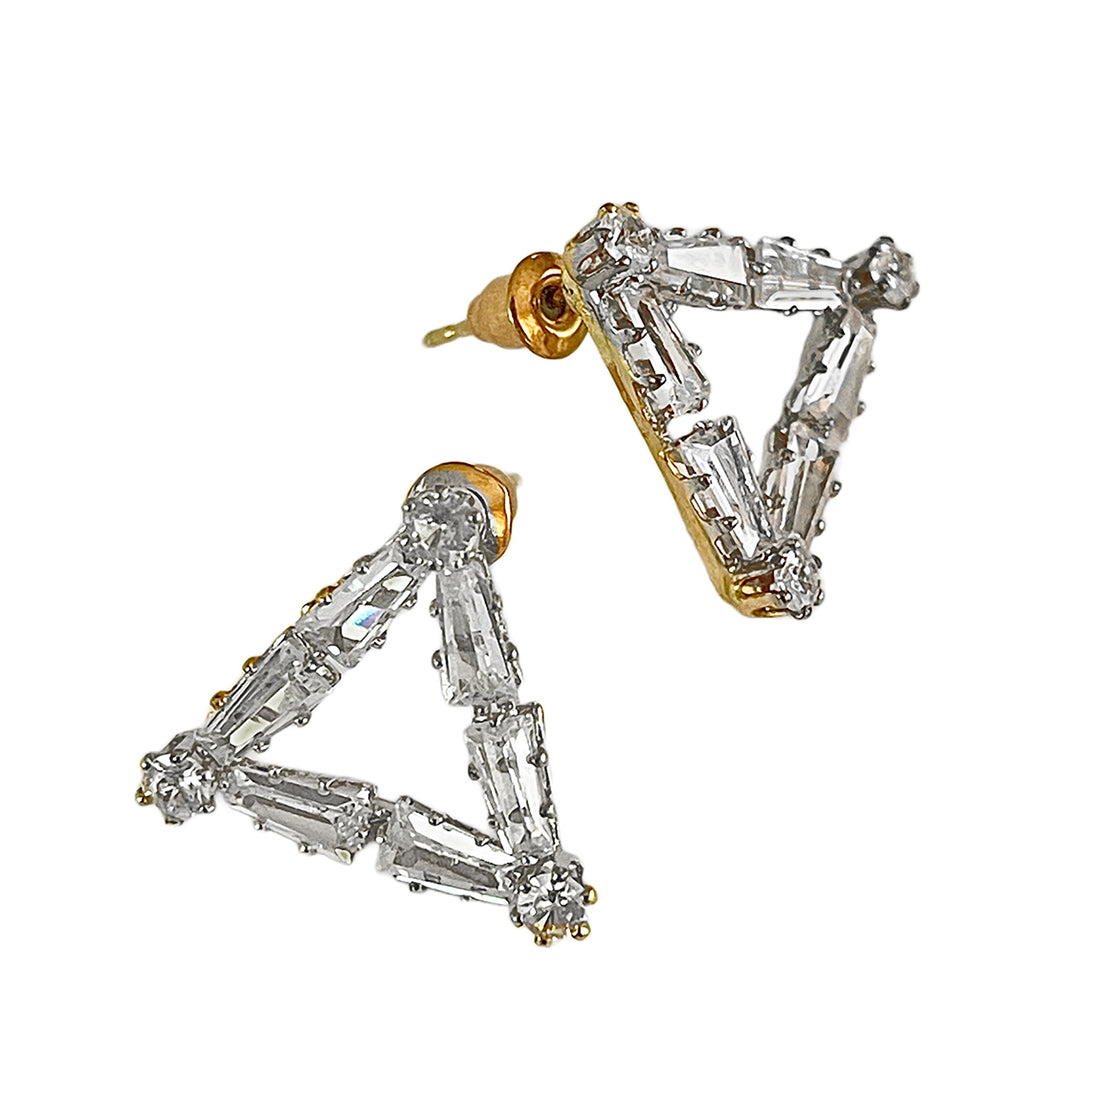 Rhinestone Studded Triangular Gold-Toned Stud Earrings